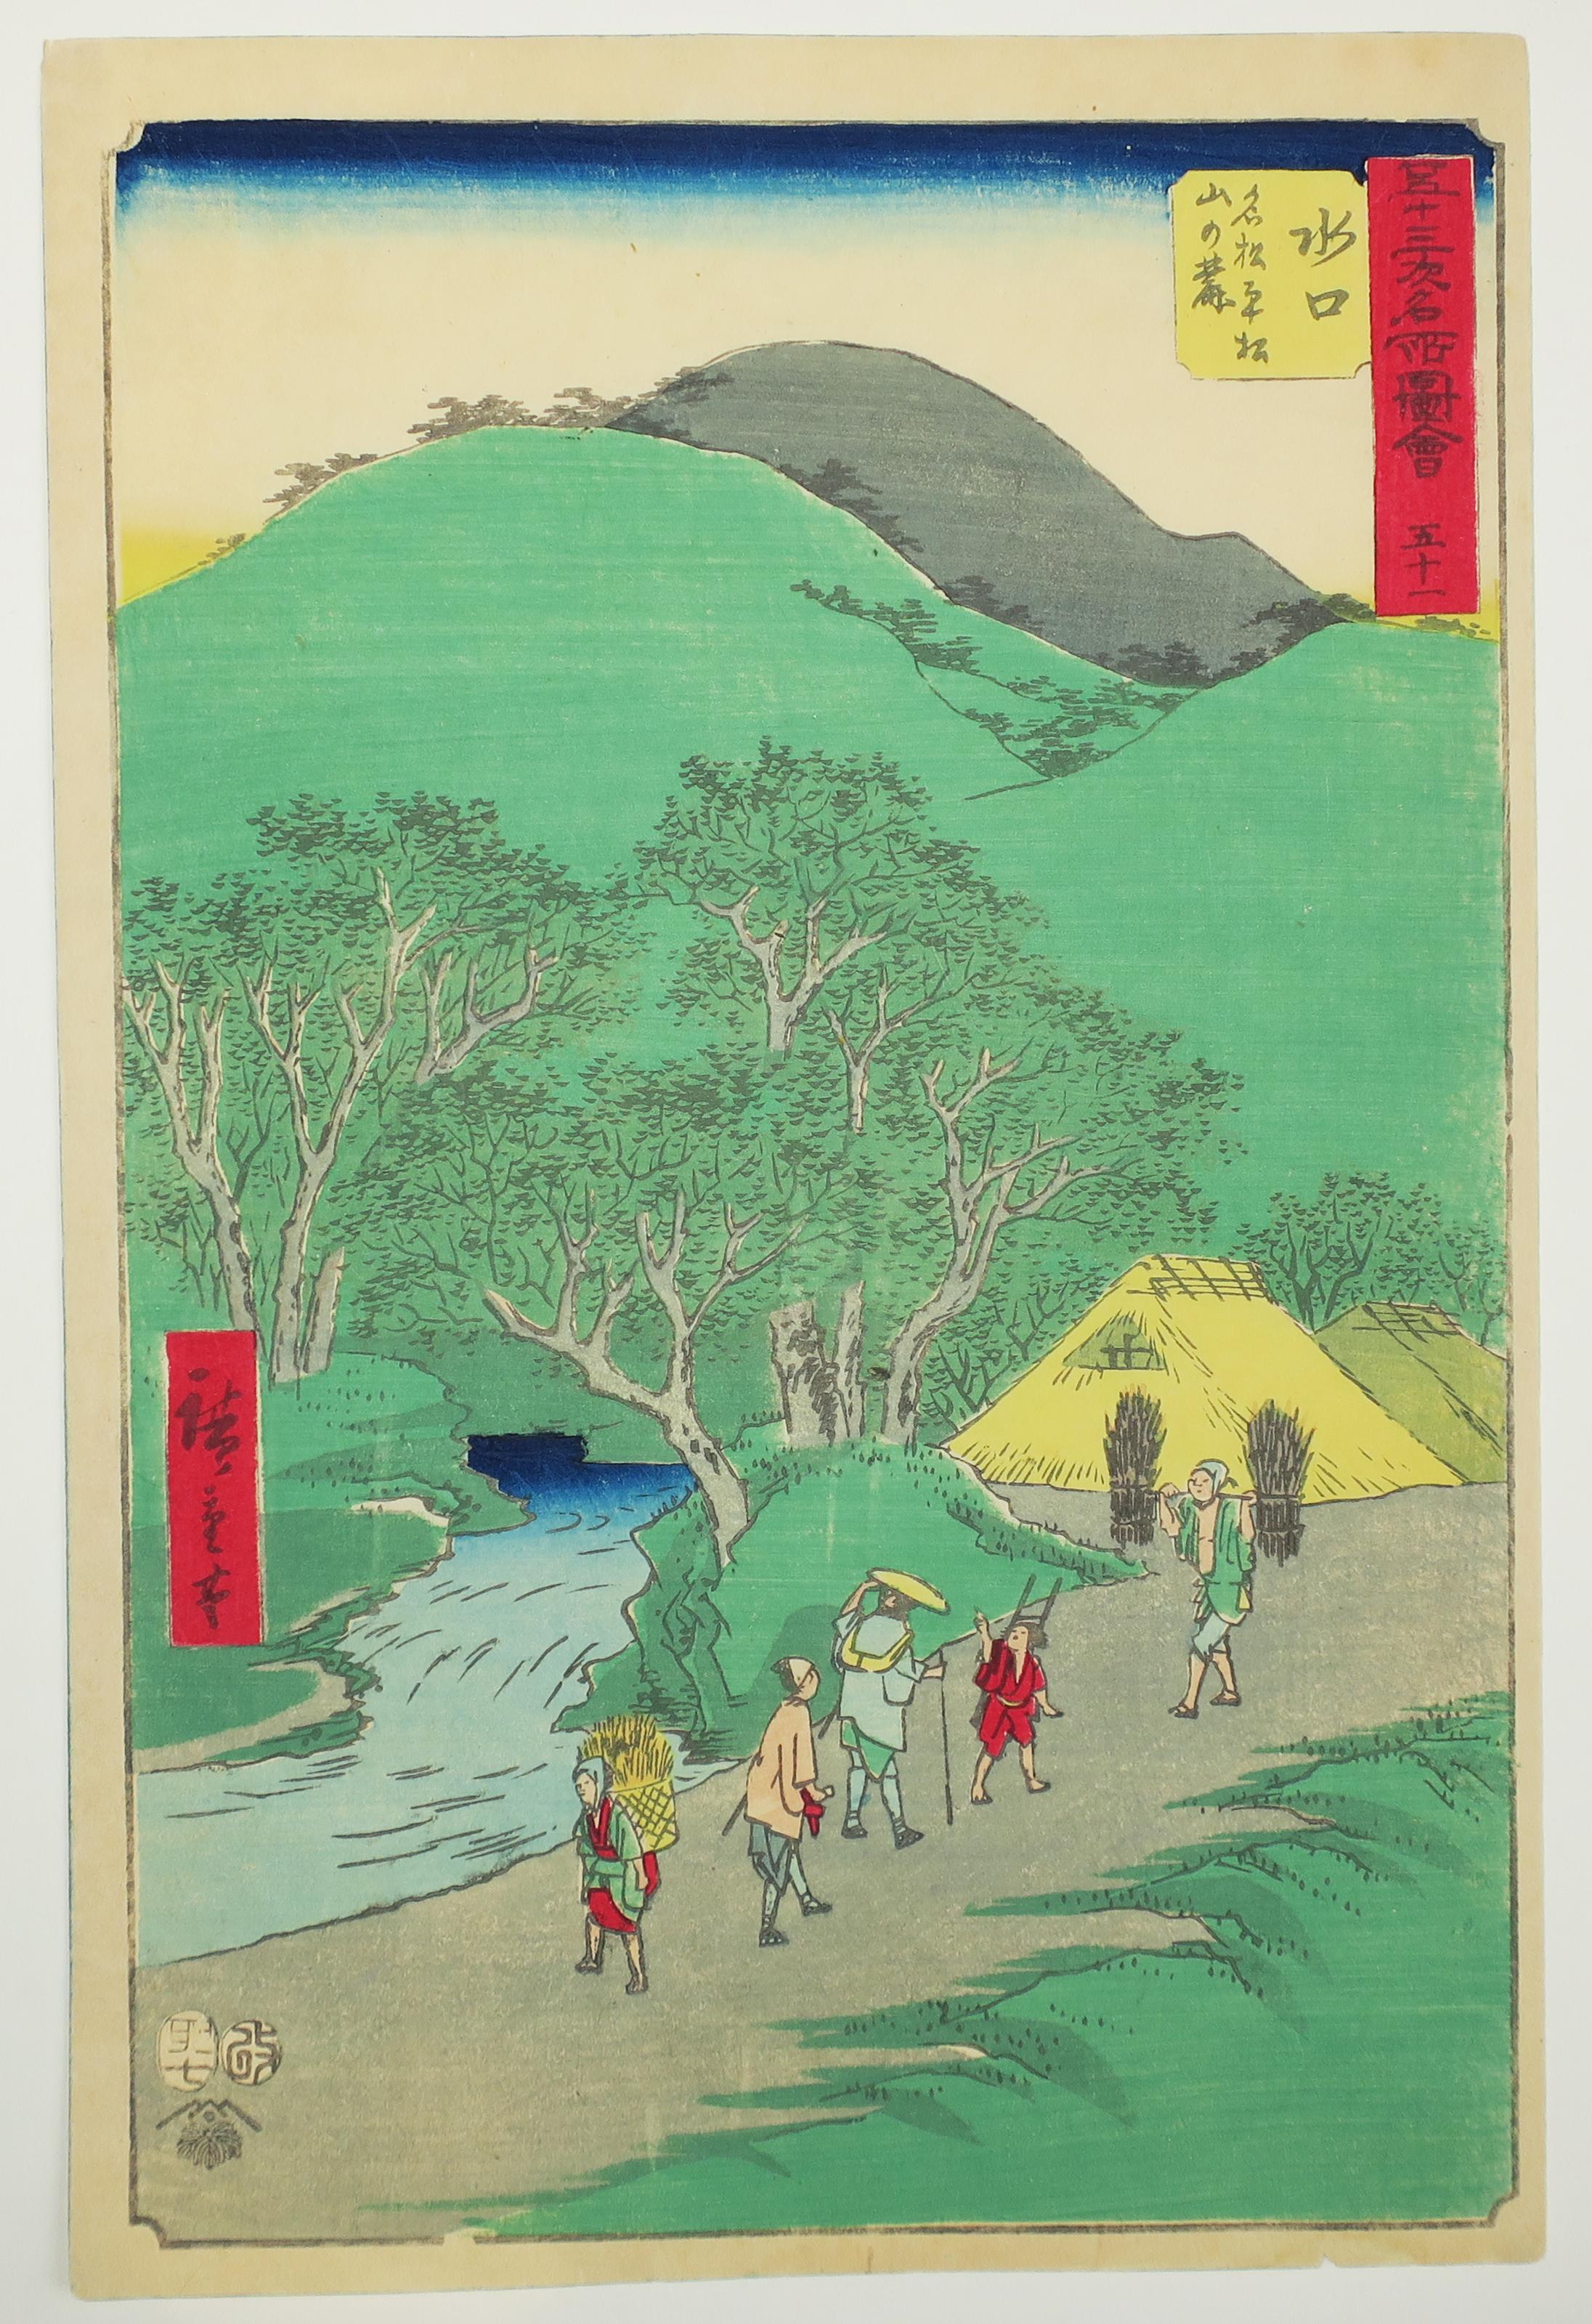 Utagawa Hiroshige (Ando Hiroshige) Landscape Print - Minakuchi: les célèbres pins au pied du mont Hiramatsu. 1855.